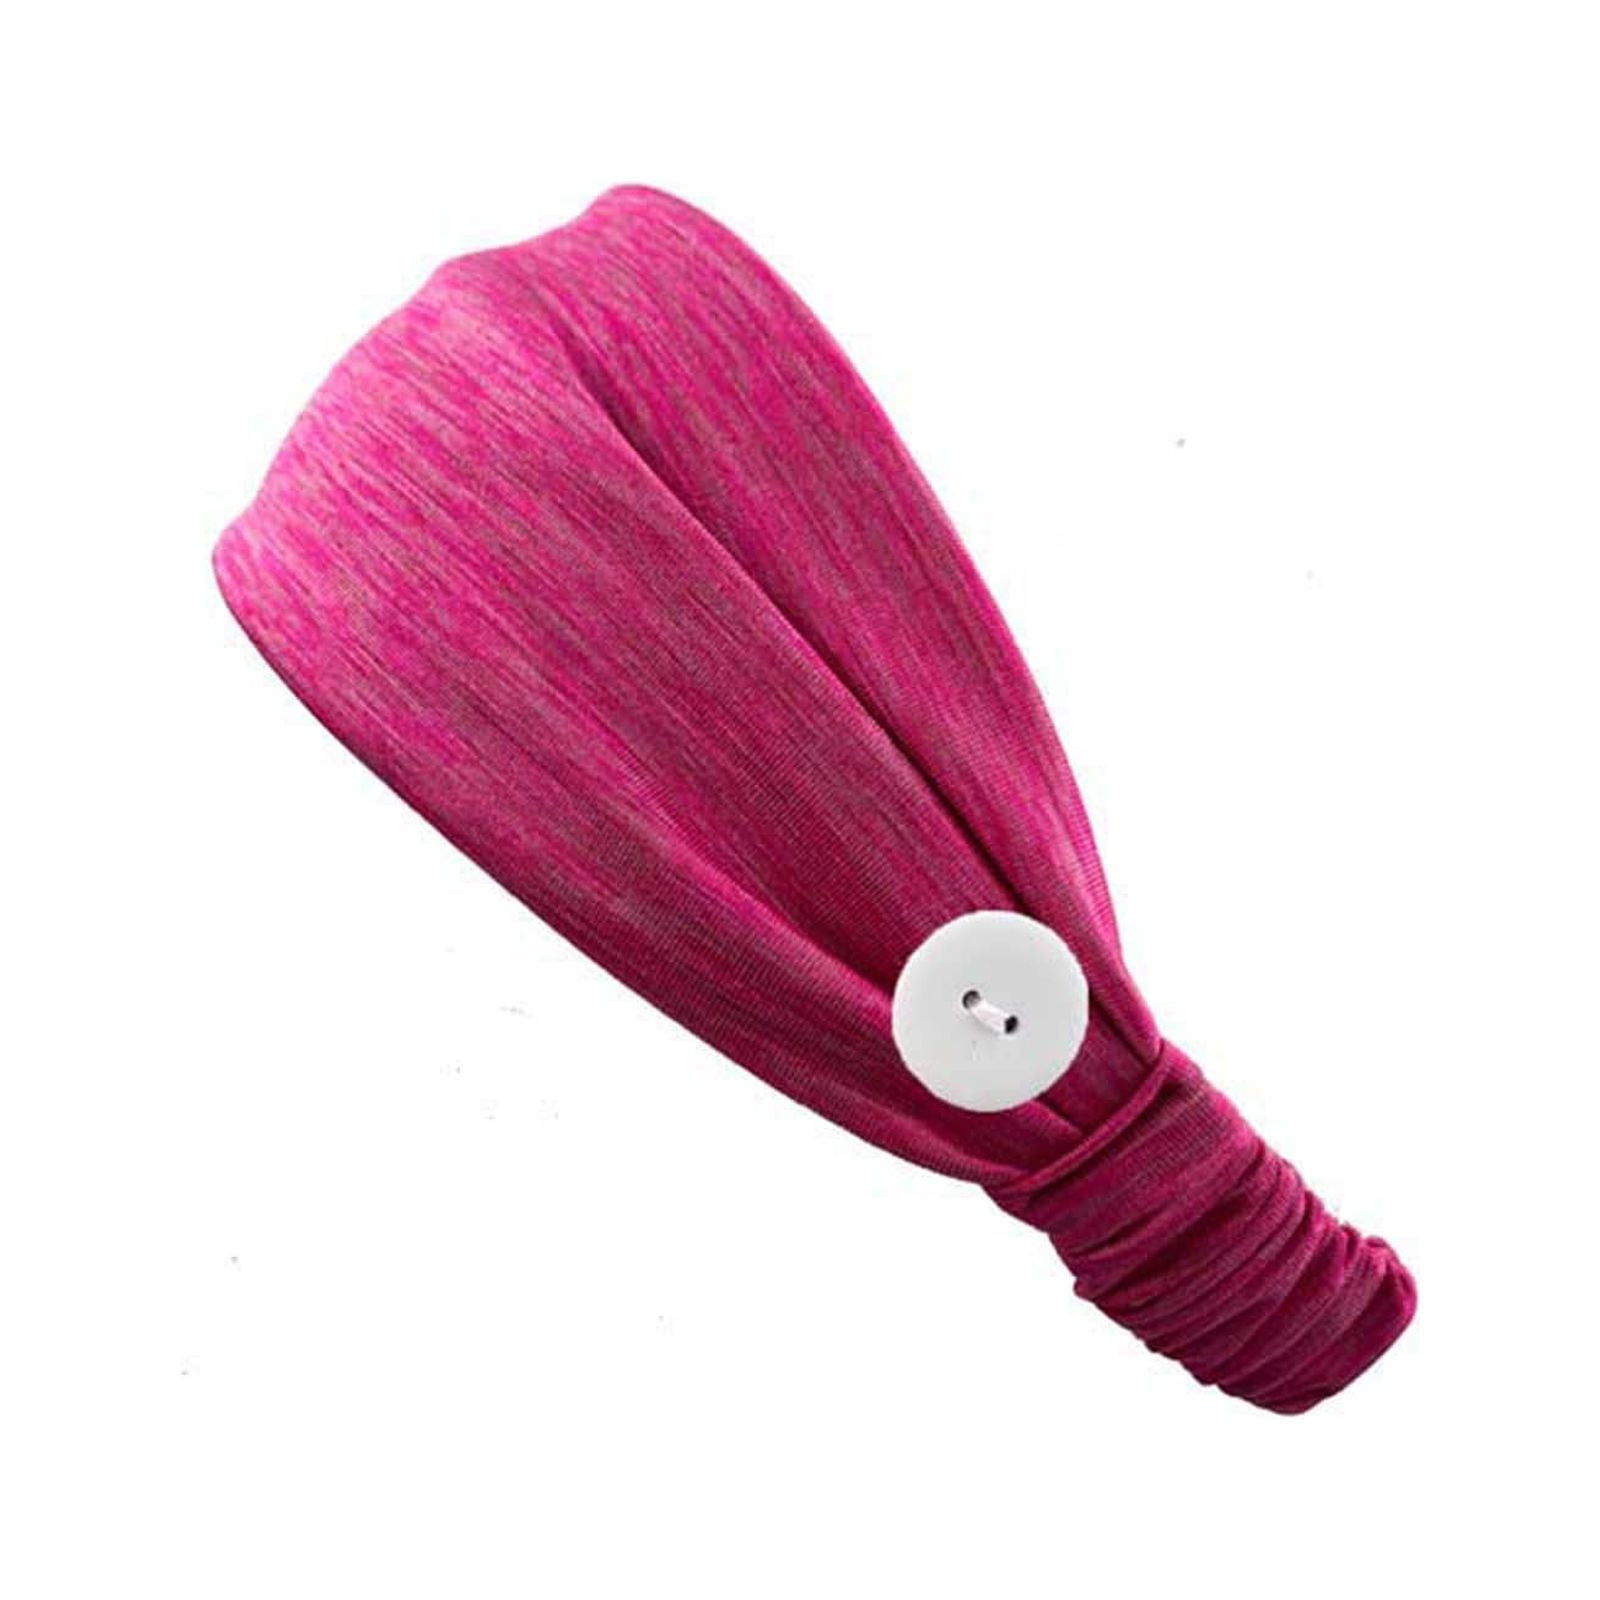 Yuelianxi Elastic Headband with Button Yoga Workout Running Turban Hair ...